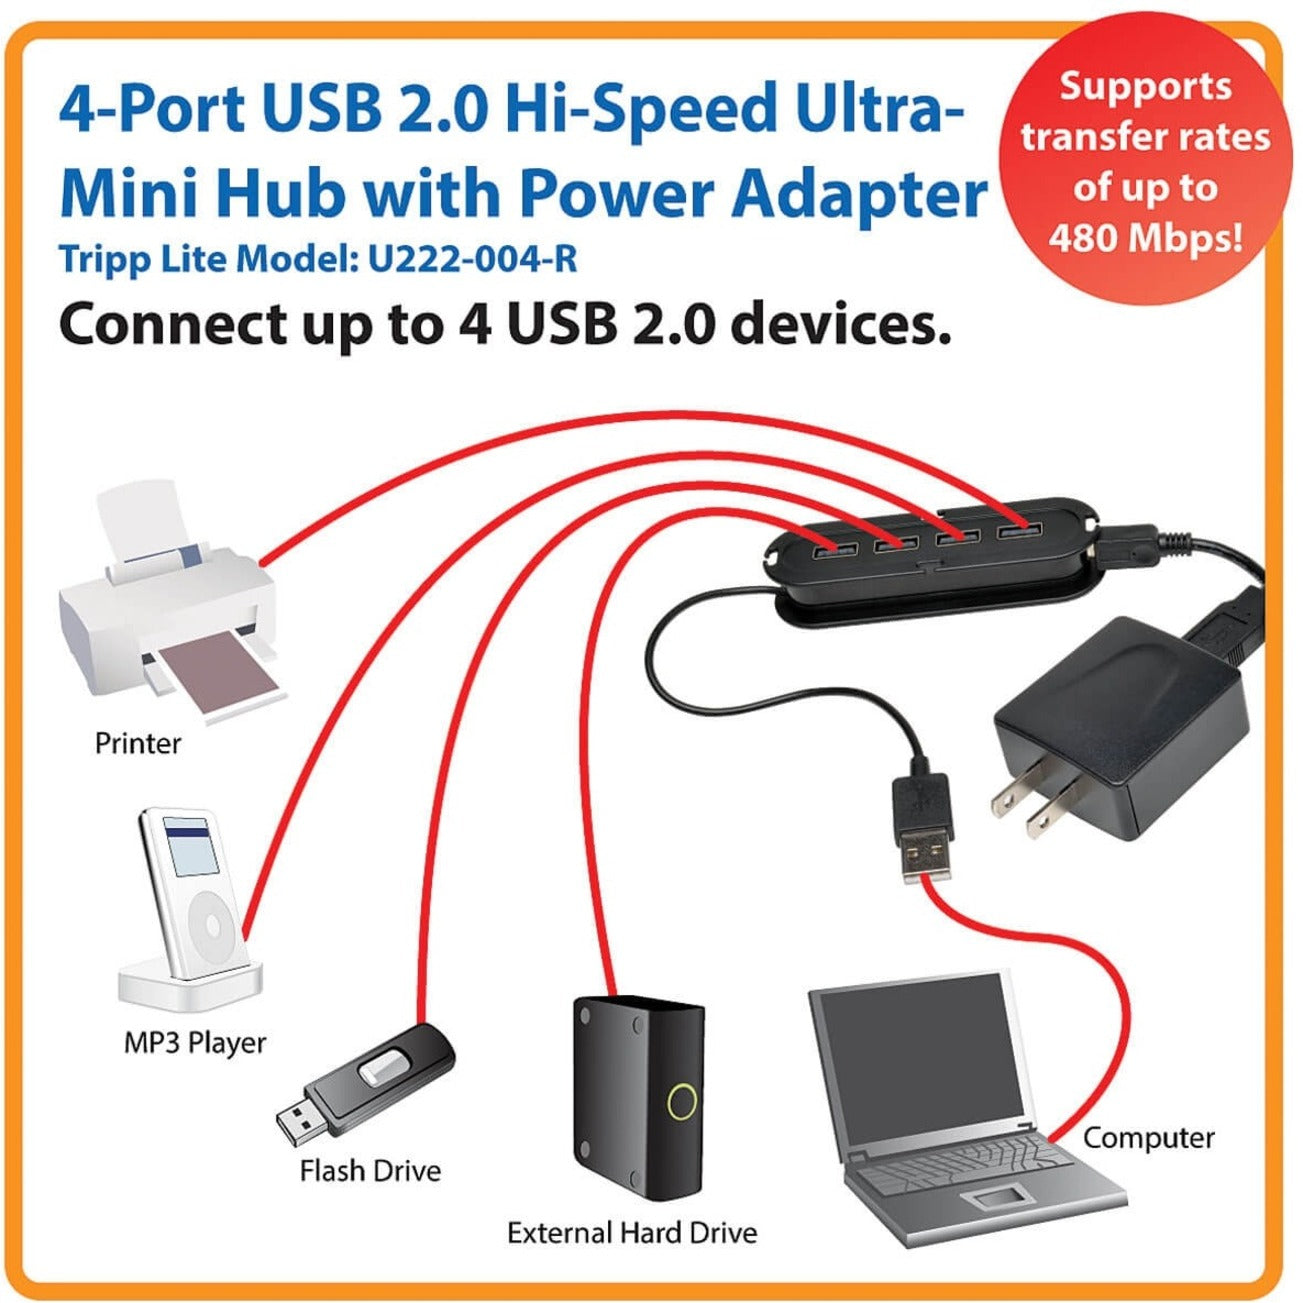 Tripp Lite U222-004-R 4-Port USB 2.0 Hi-Speed Ultra-Mini Hub Compact Design Black  トリップライト U222-004-R 4ポートUSB 2.0ハイスピードウルトラミニハブ、コンパクトデザイン、ブラック